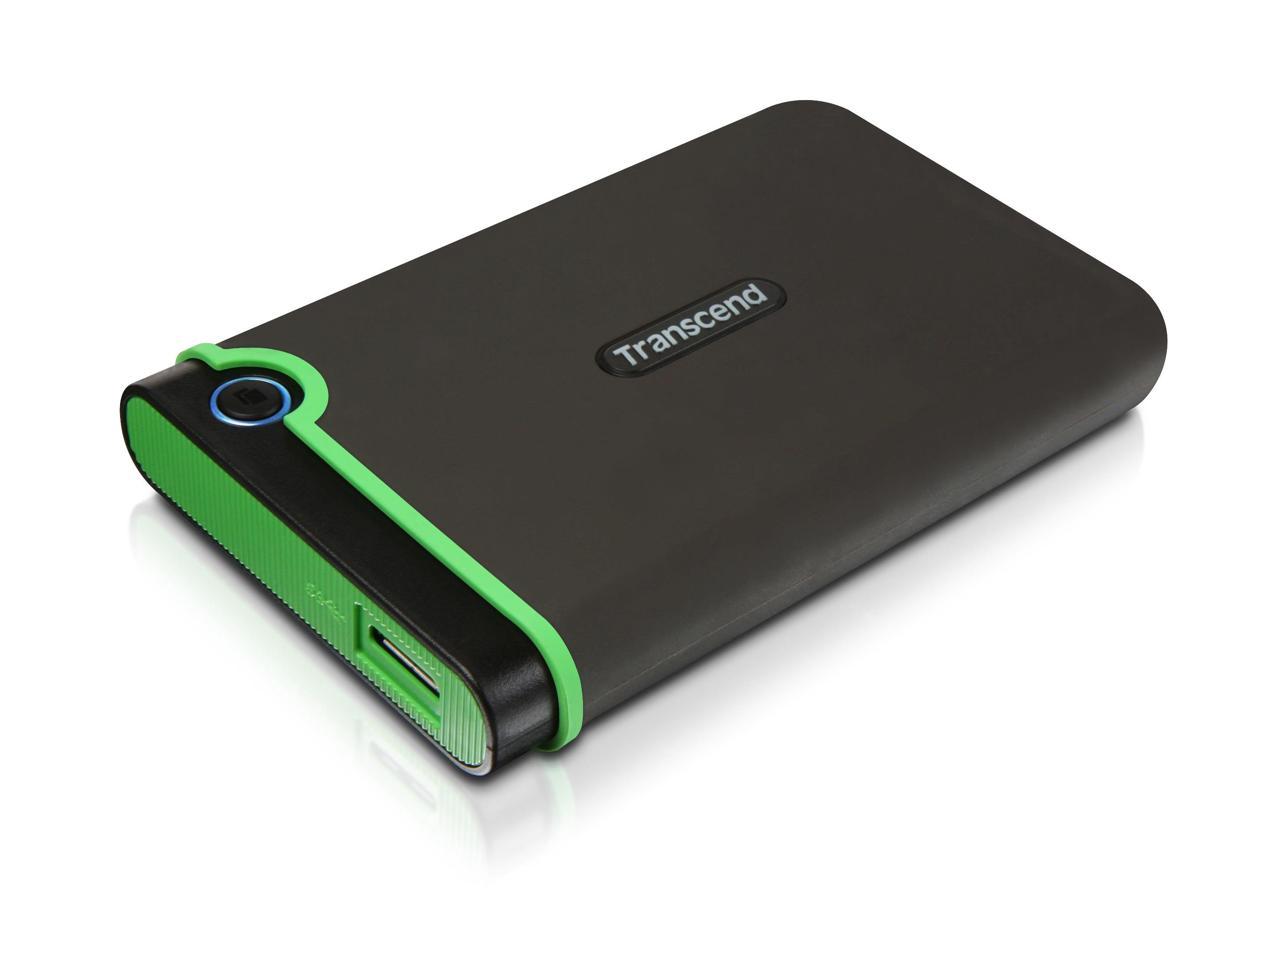 1TB Transcend StoreJet 25M3 USB3.1 Slim Portable Hard Drive Shock-Resistant